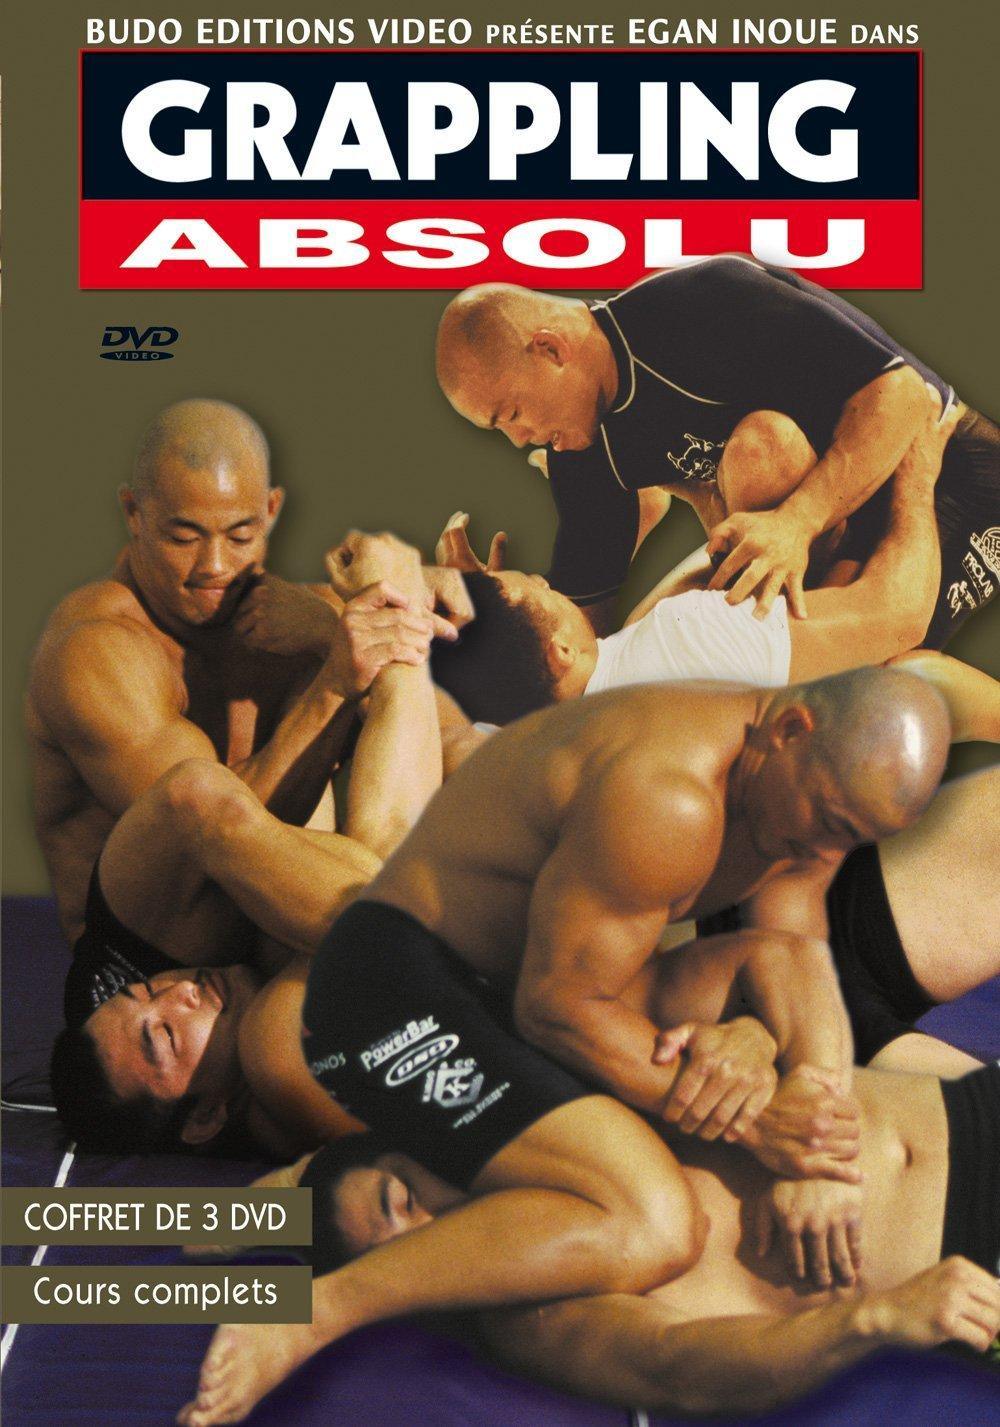 grappling-absolu-coffret-de-3-dvd-budo-editions